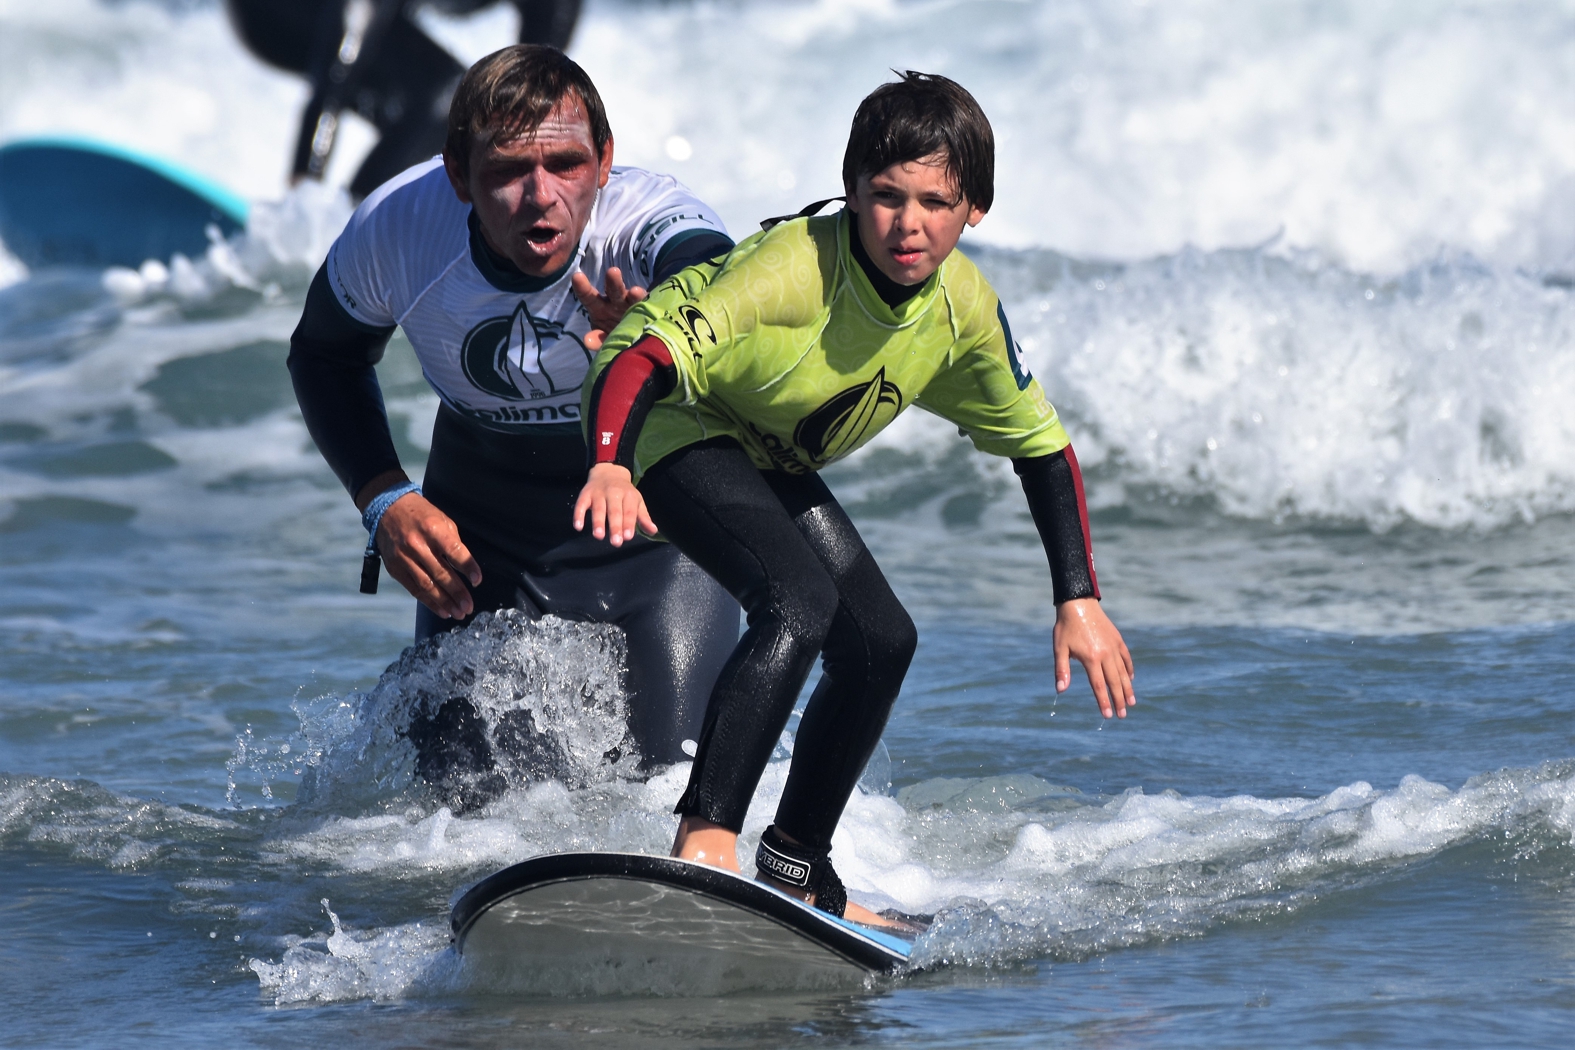 Calima surf school